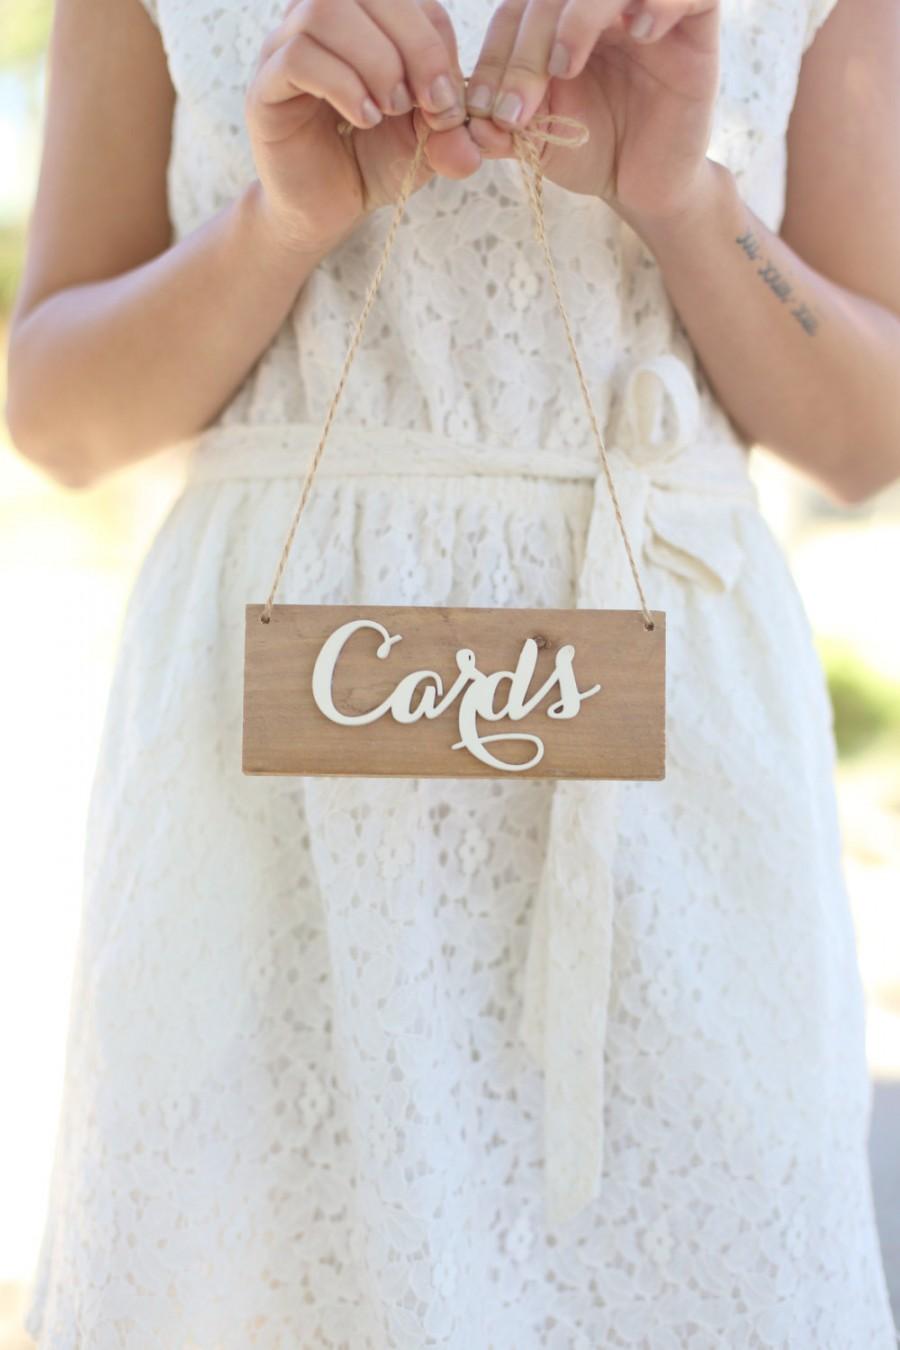 زفاف - Rustic Wedding Cards Sign QUICK shipping available